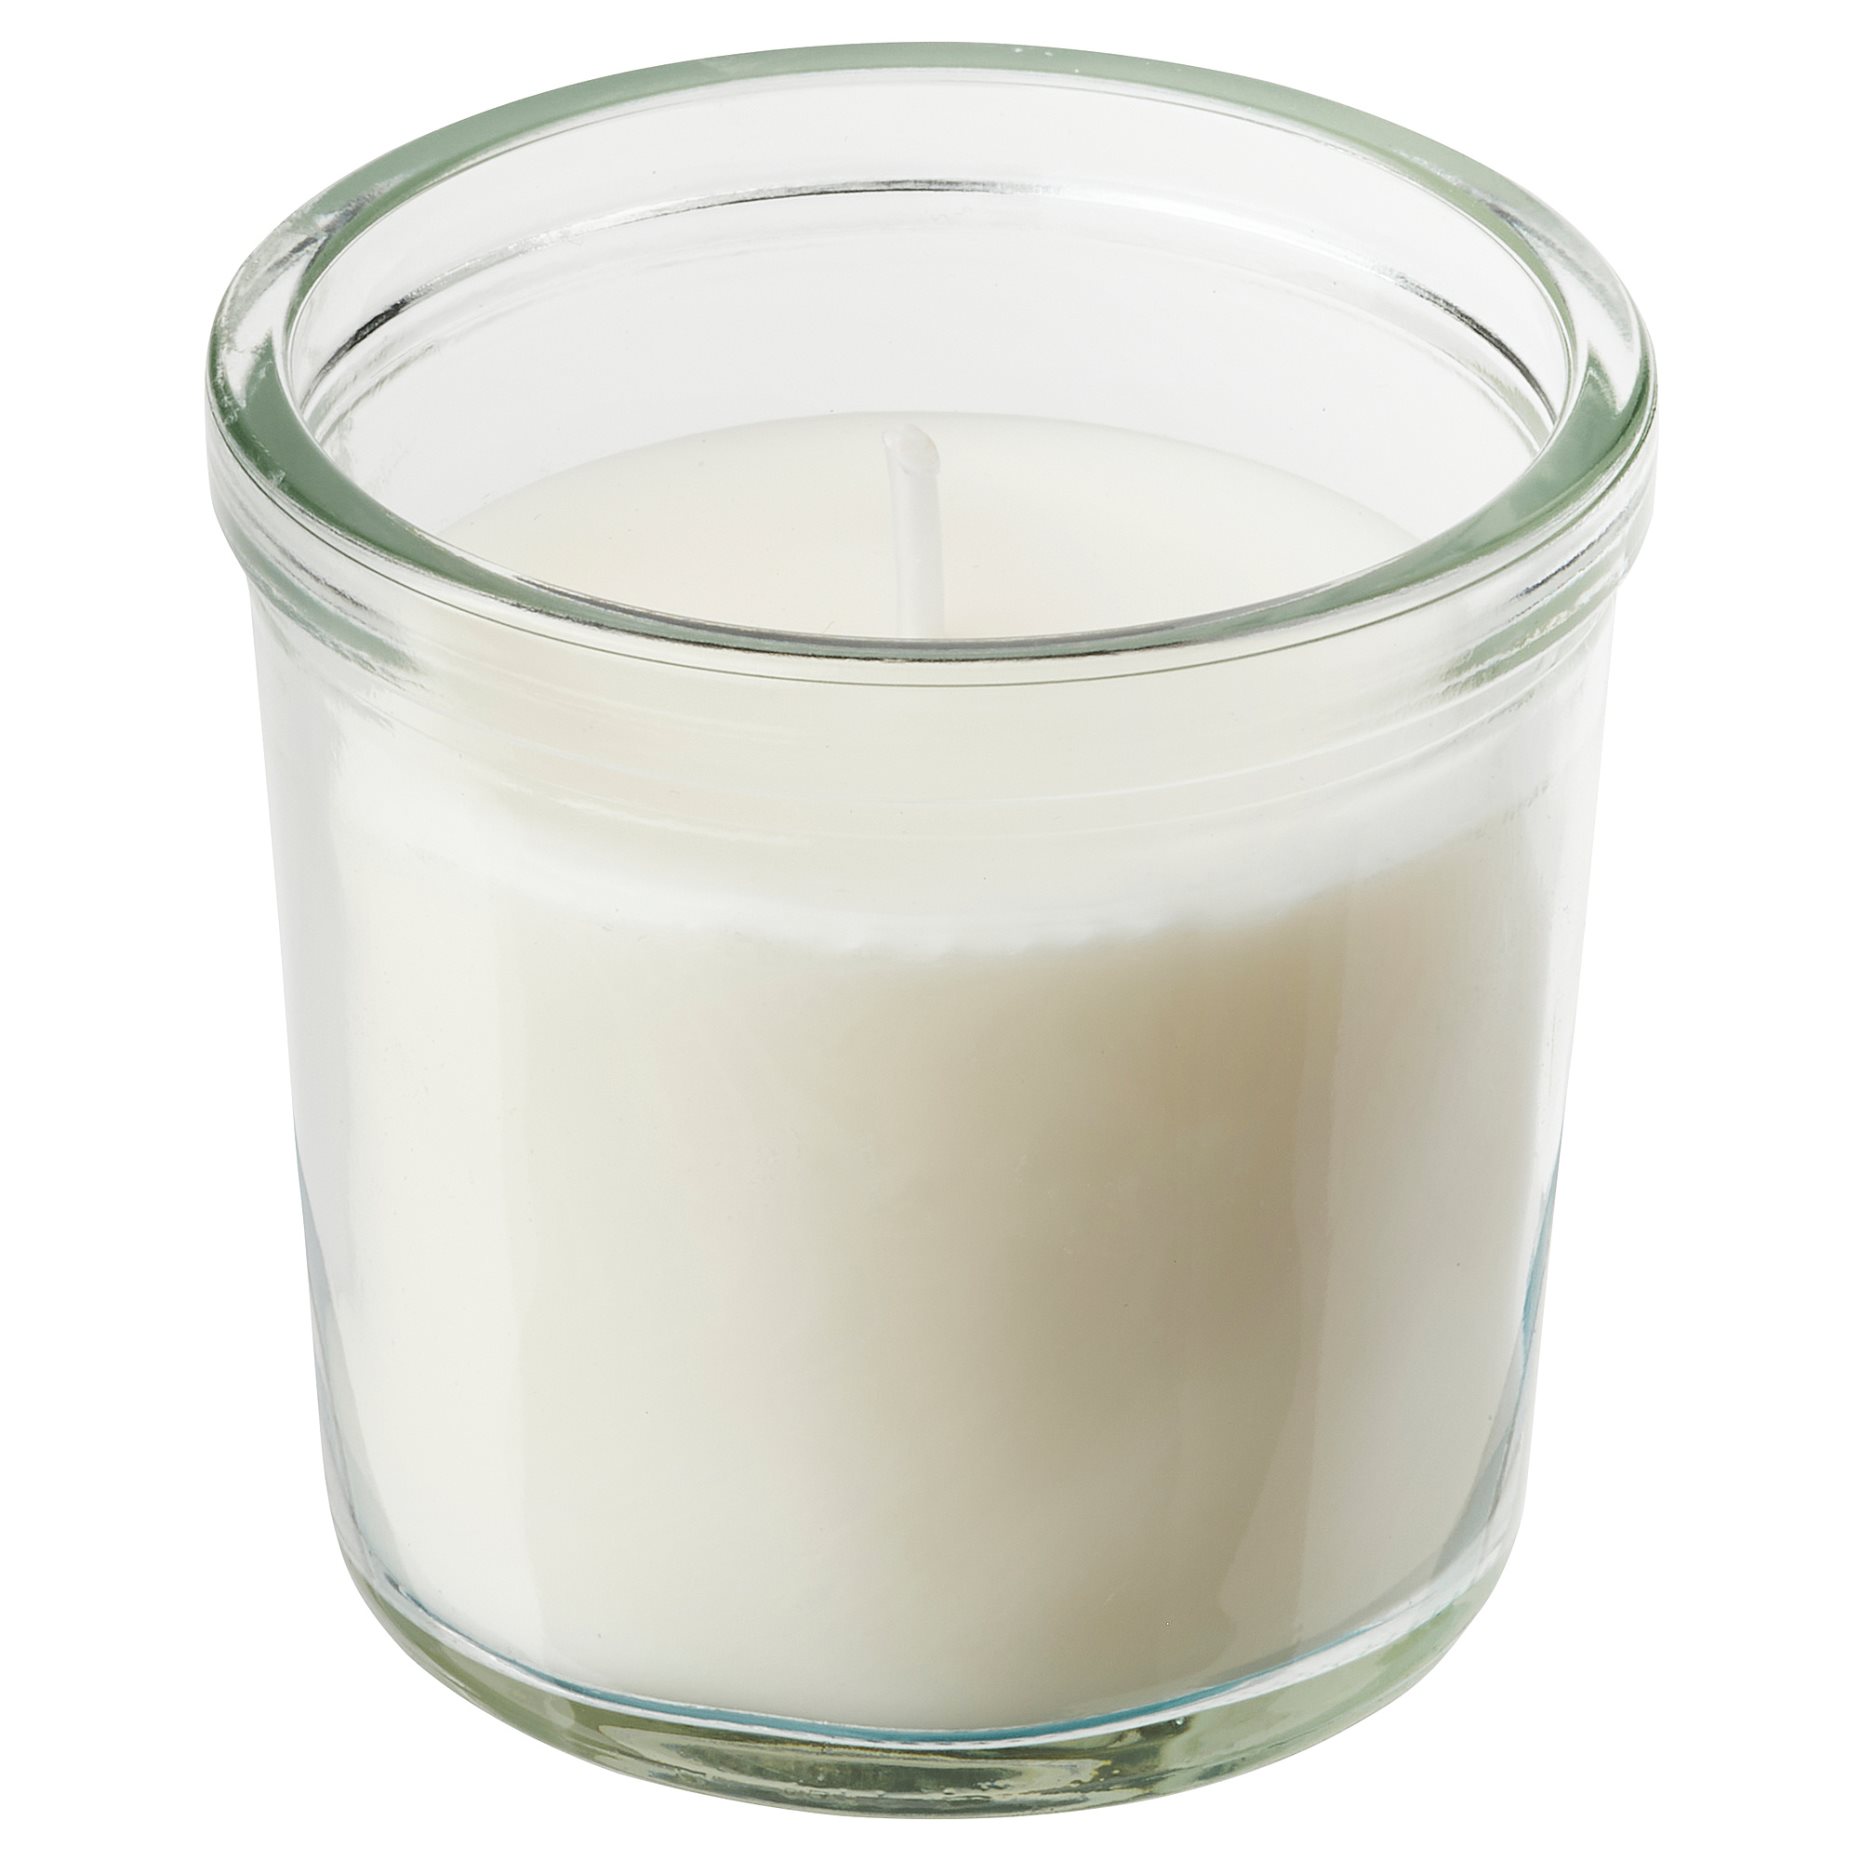 JAMLIK scented candle in glass/Vanilla, 20 hr 20502109